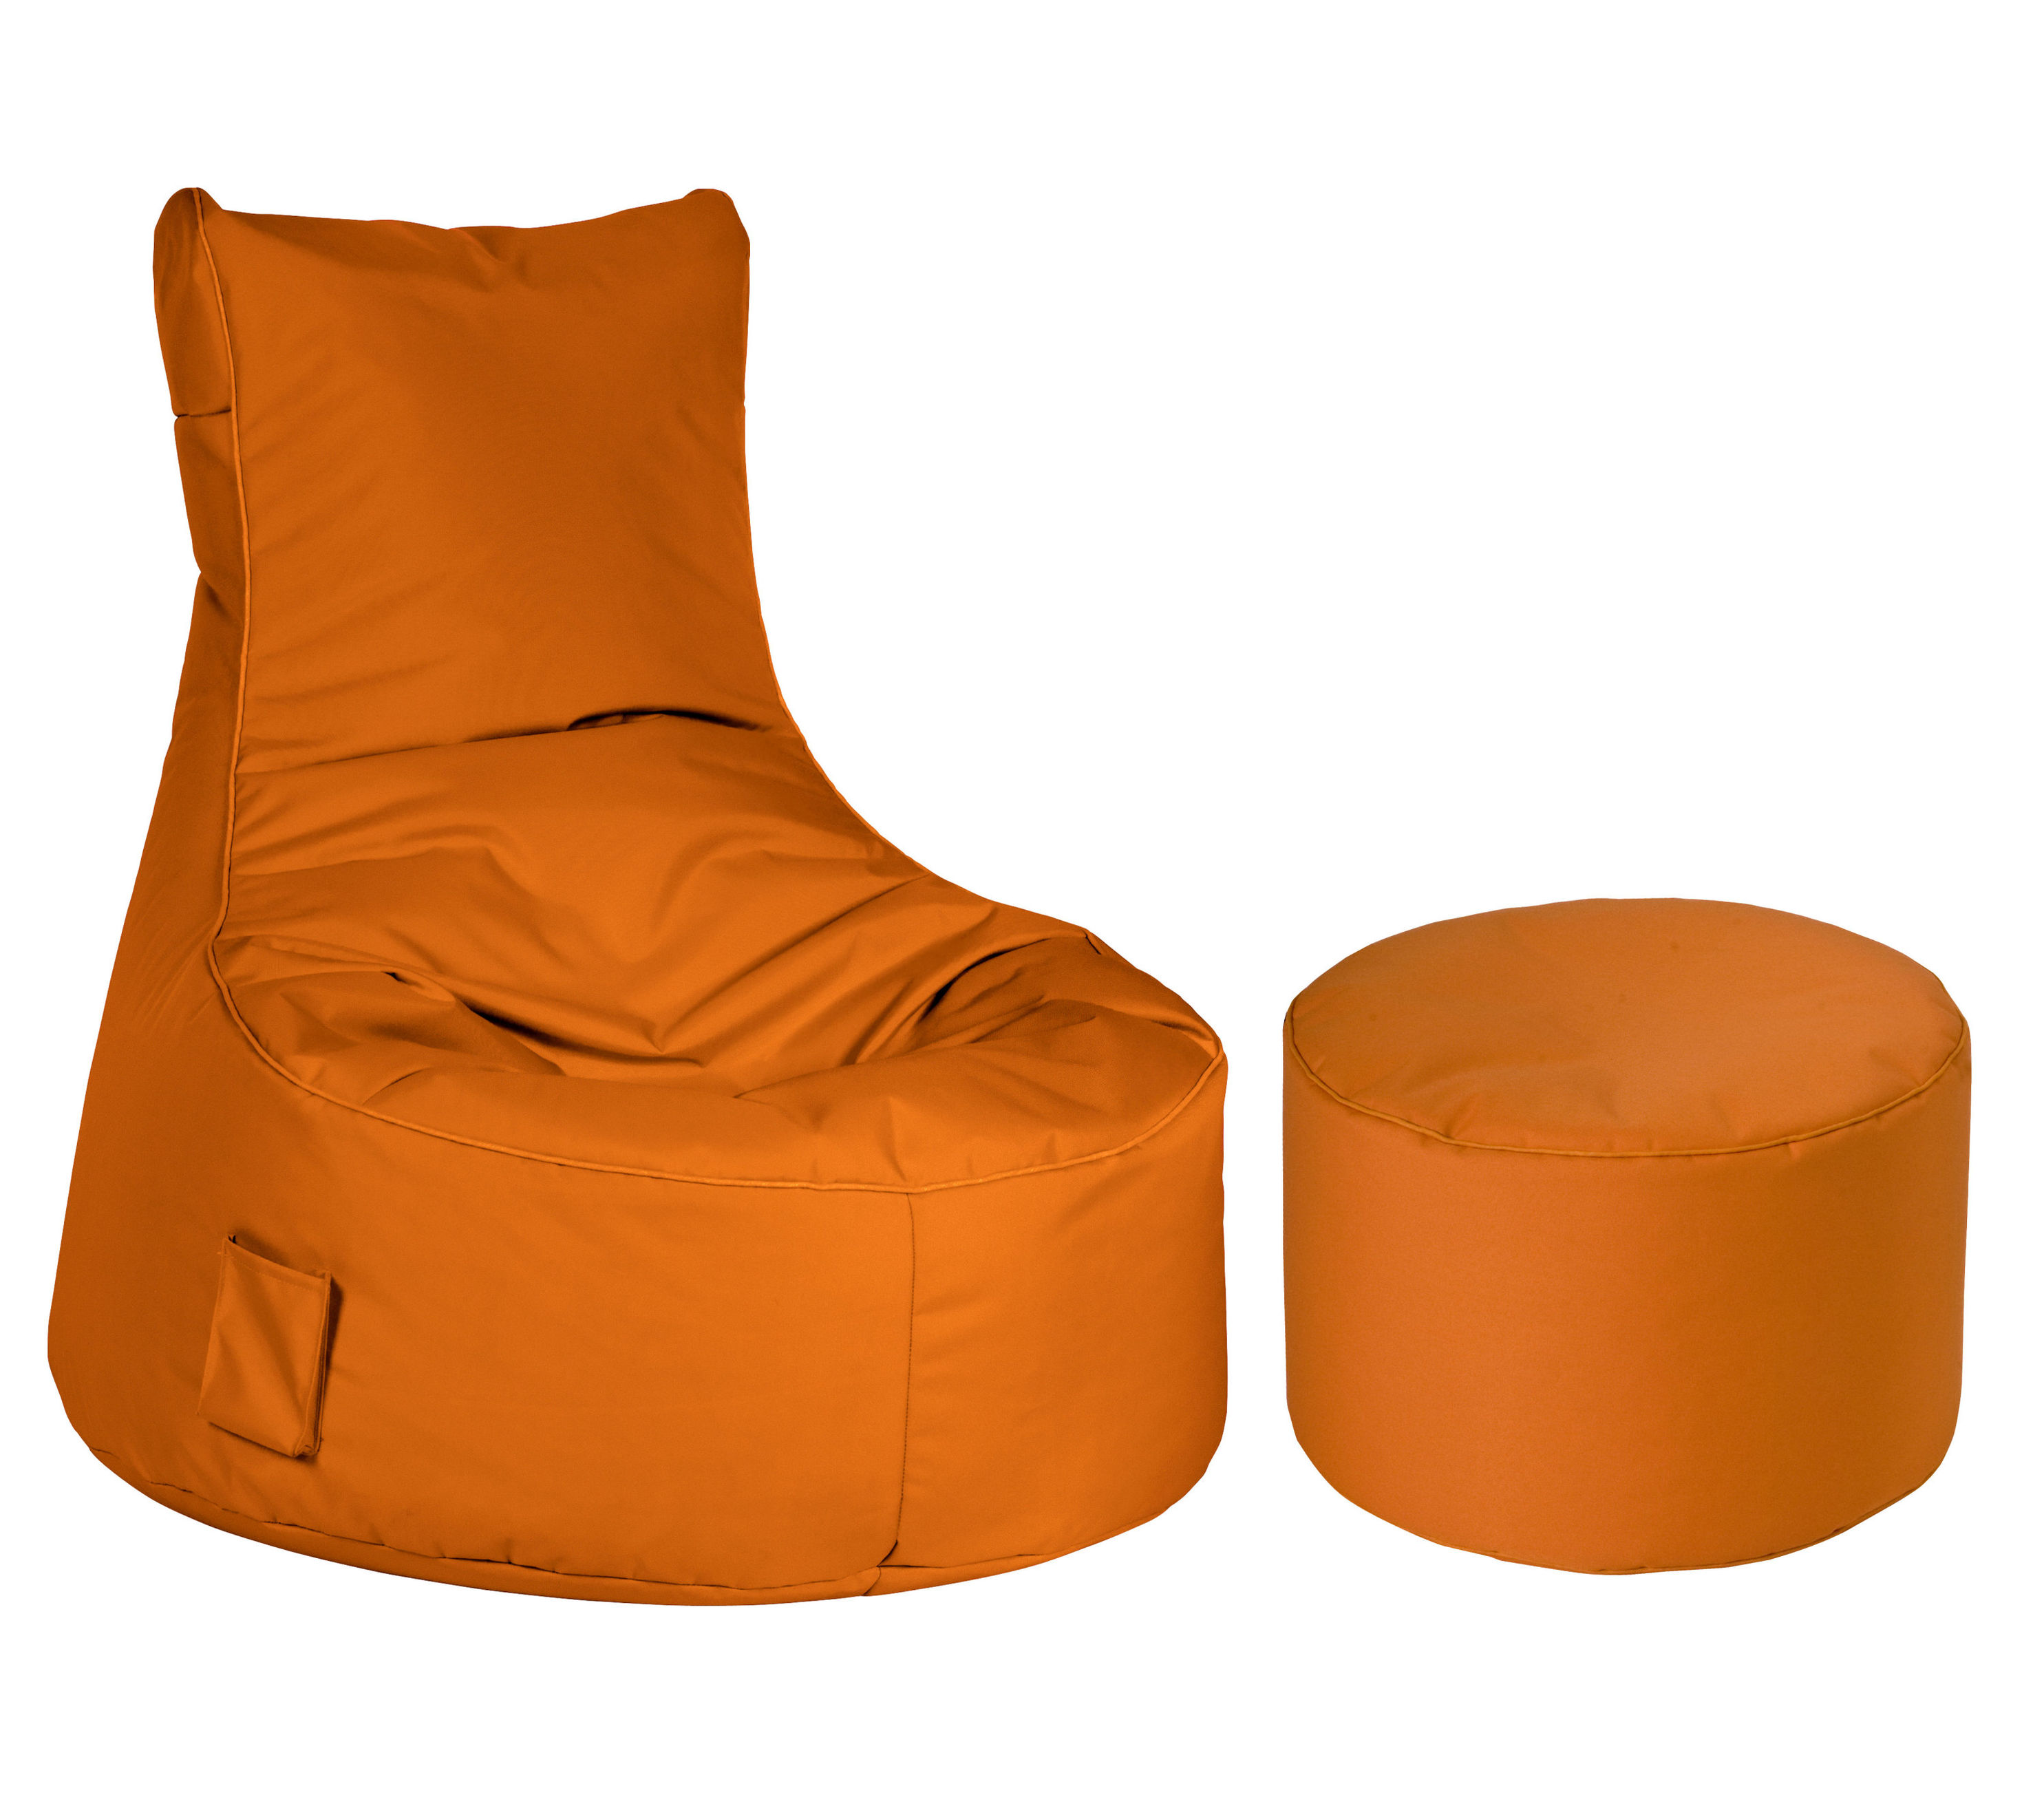 Sitzsack Set: Swing & Dot Com Farbe: orange | Weltbild.de